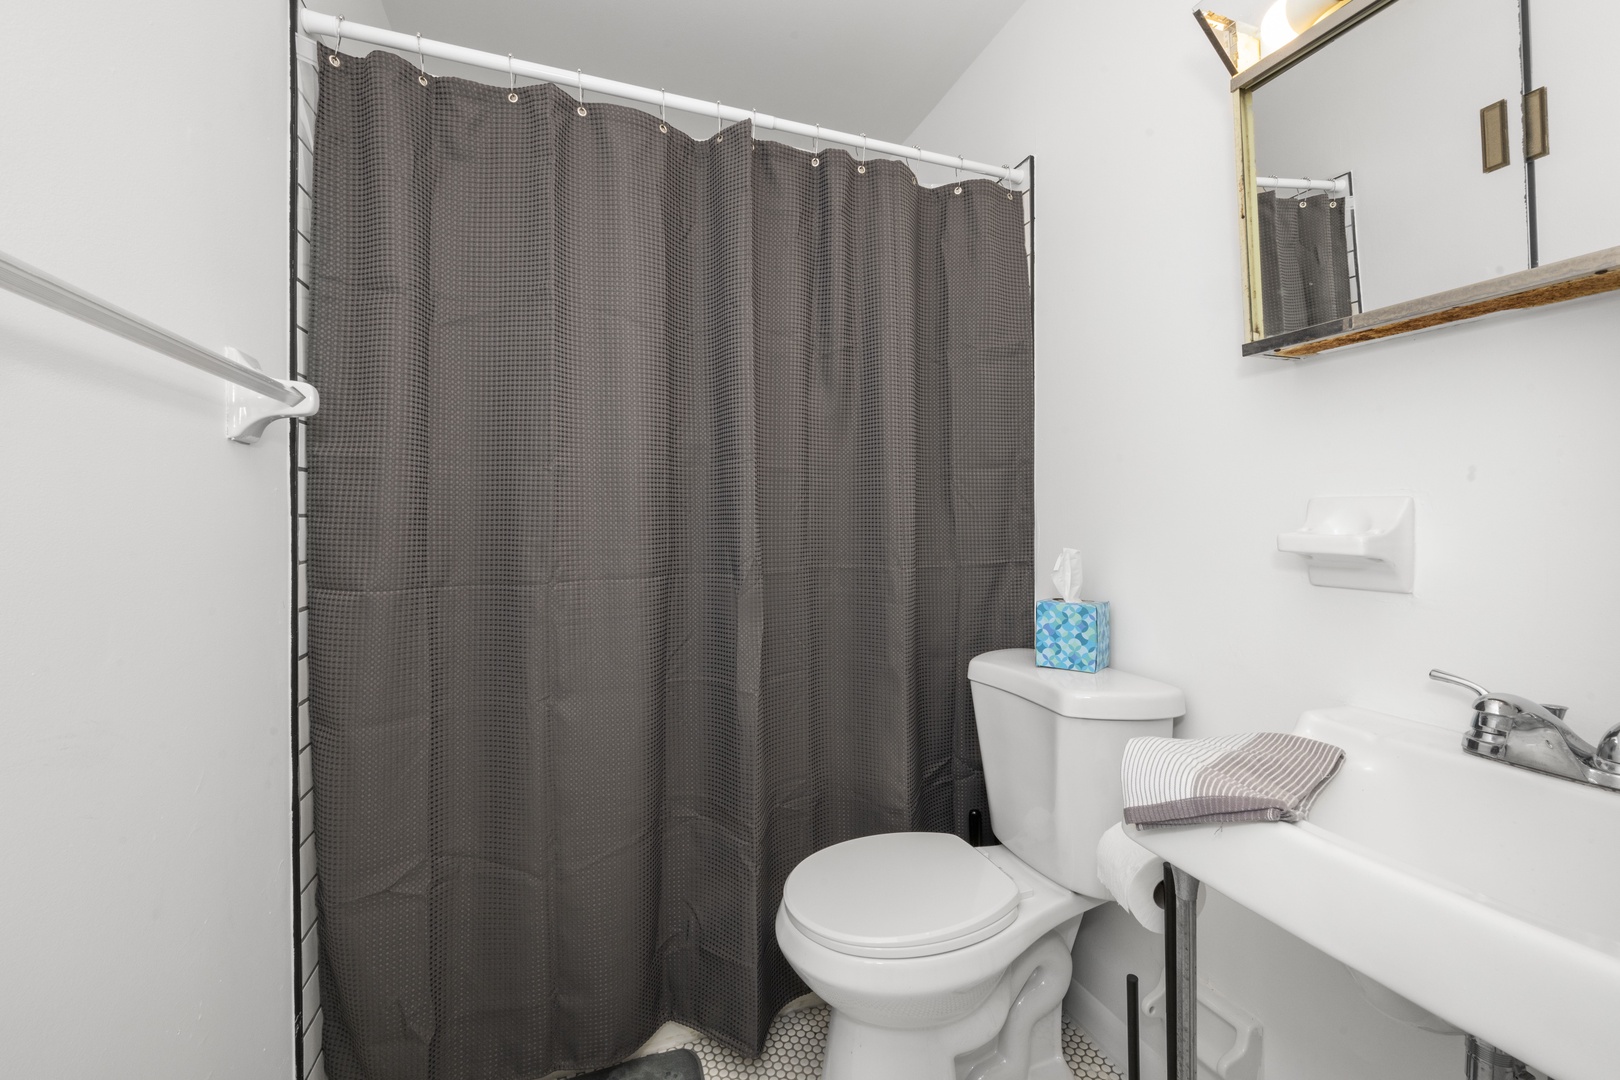 The elegant full bath offers a single vanity & shower/tub combo